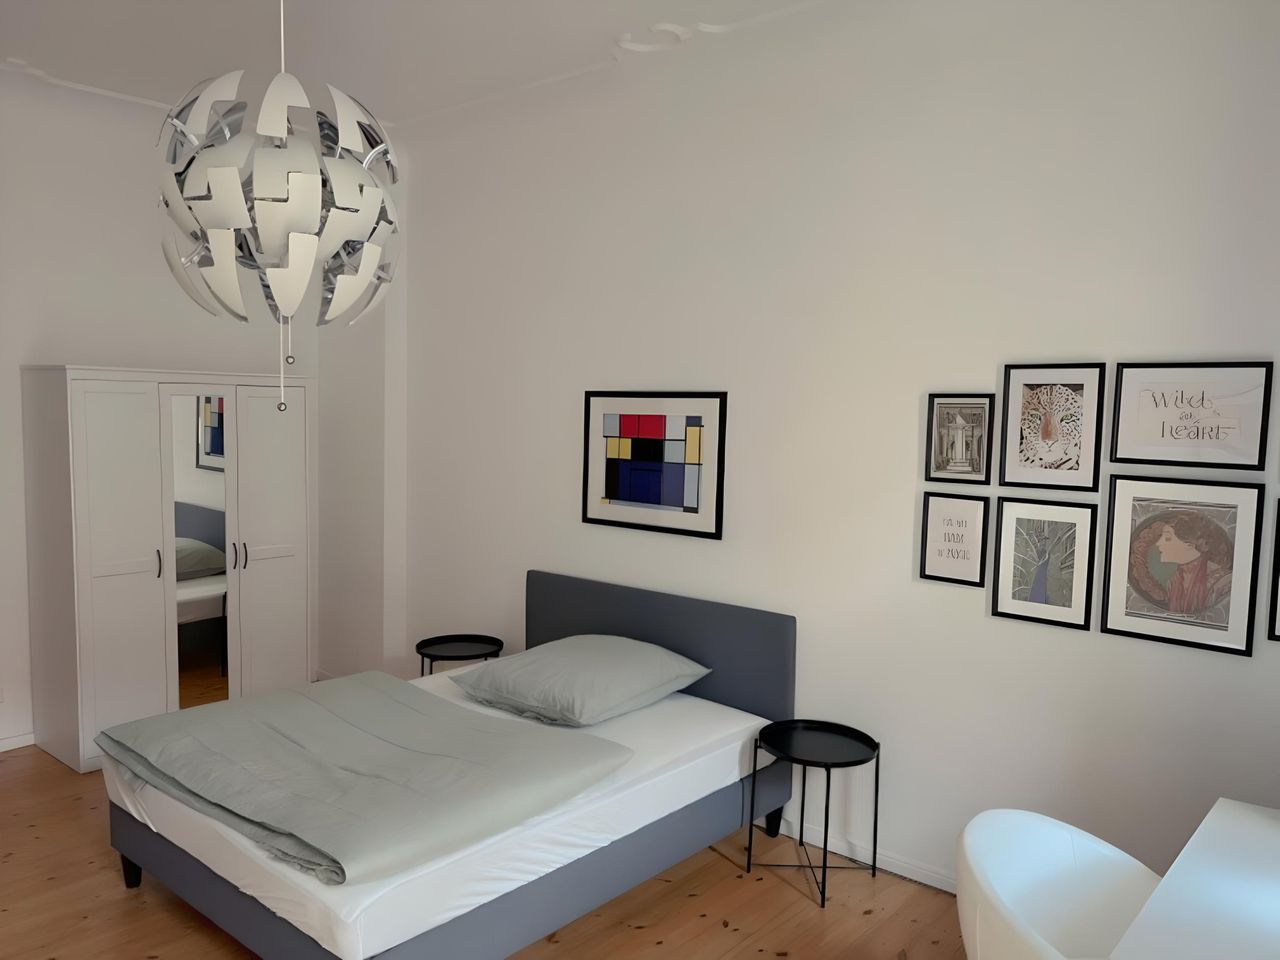 Luxury 3 bedroom apartment in the heart of Berlin Friedrichshain!